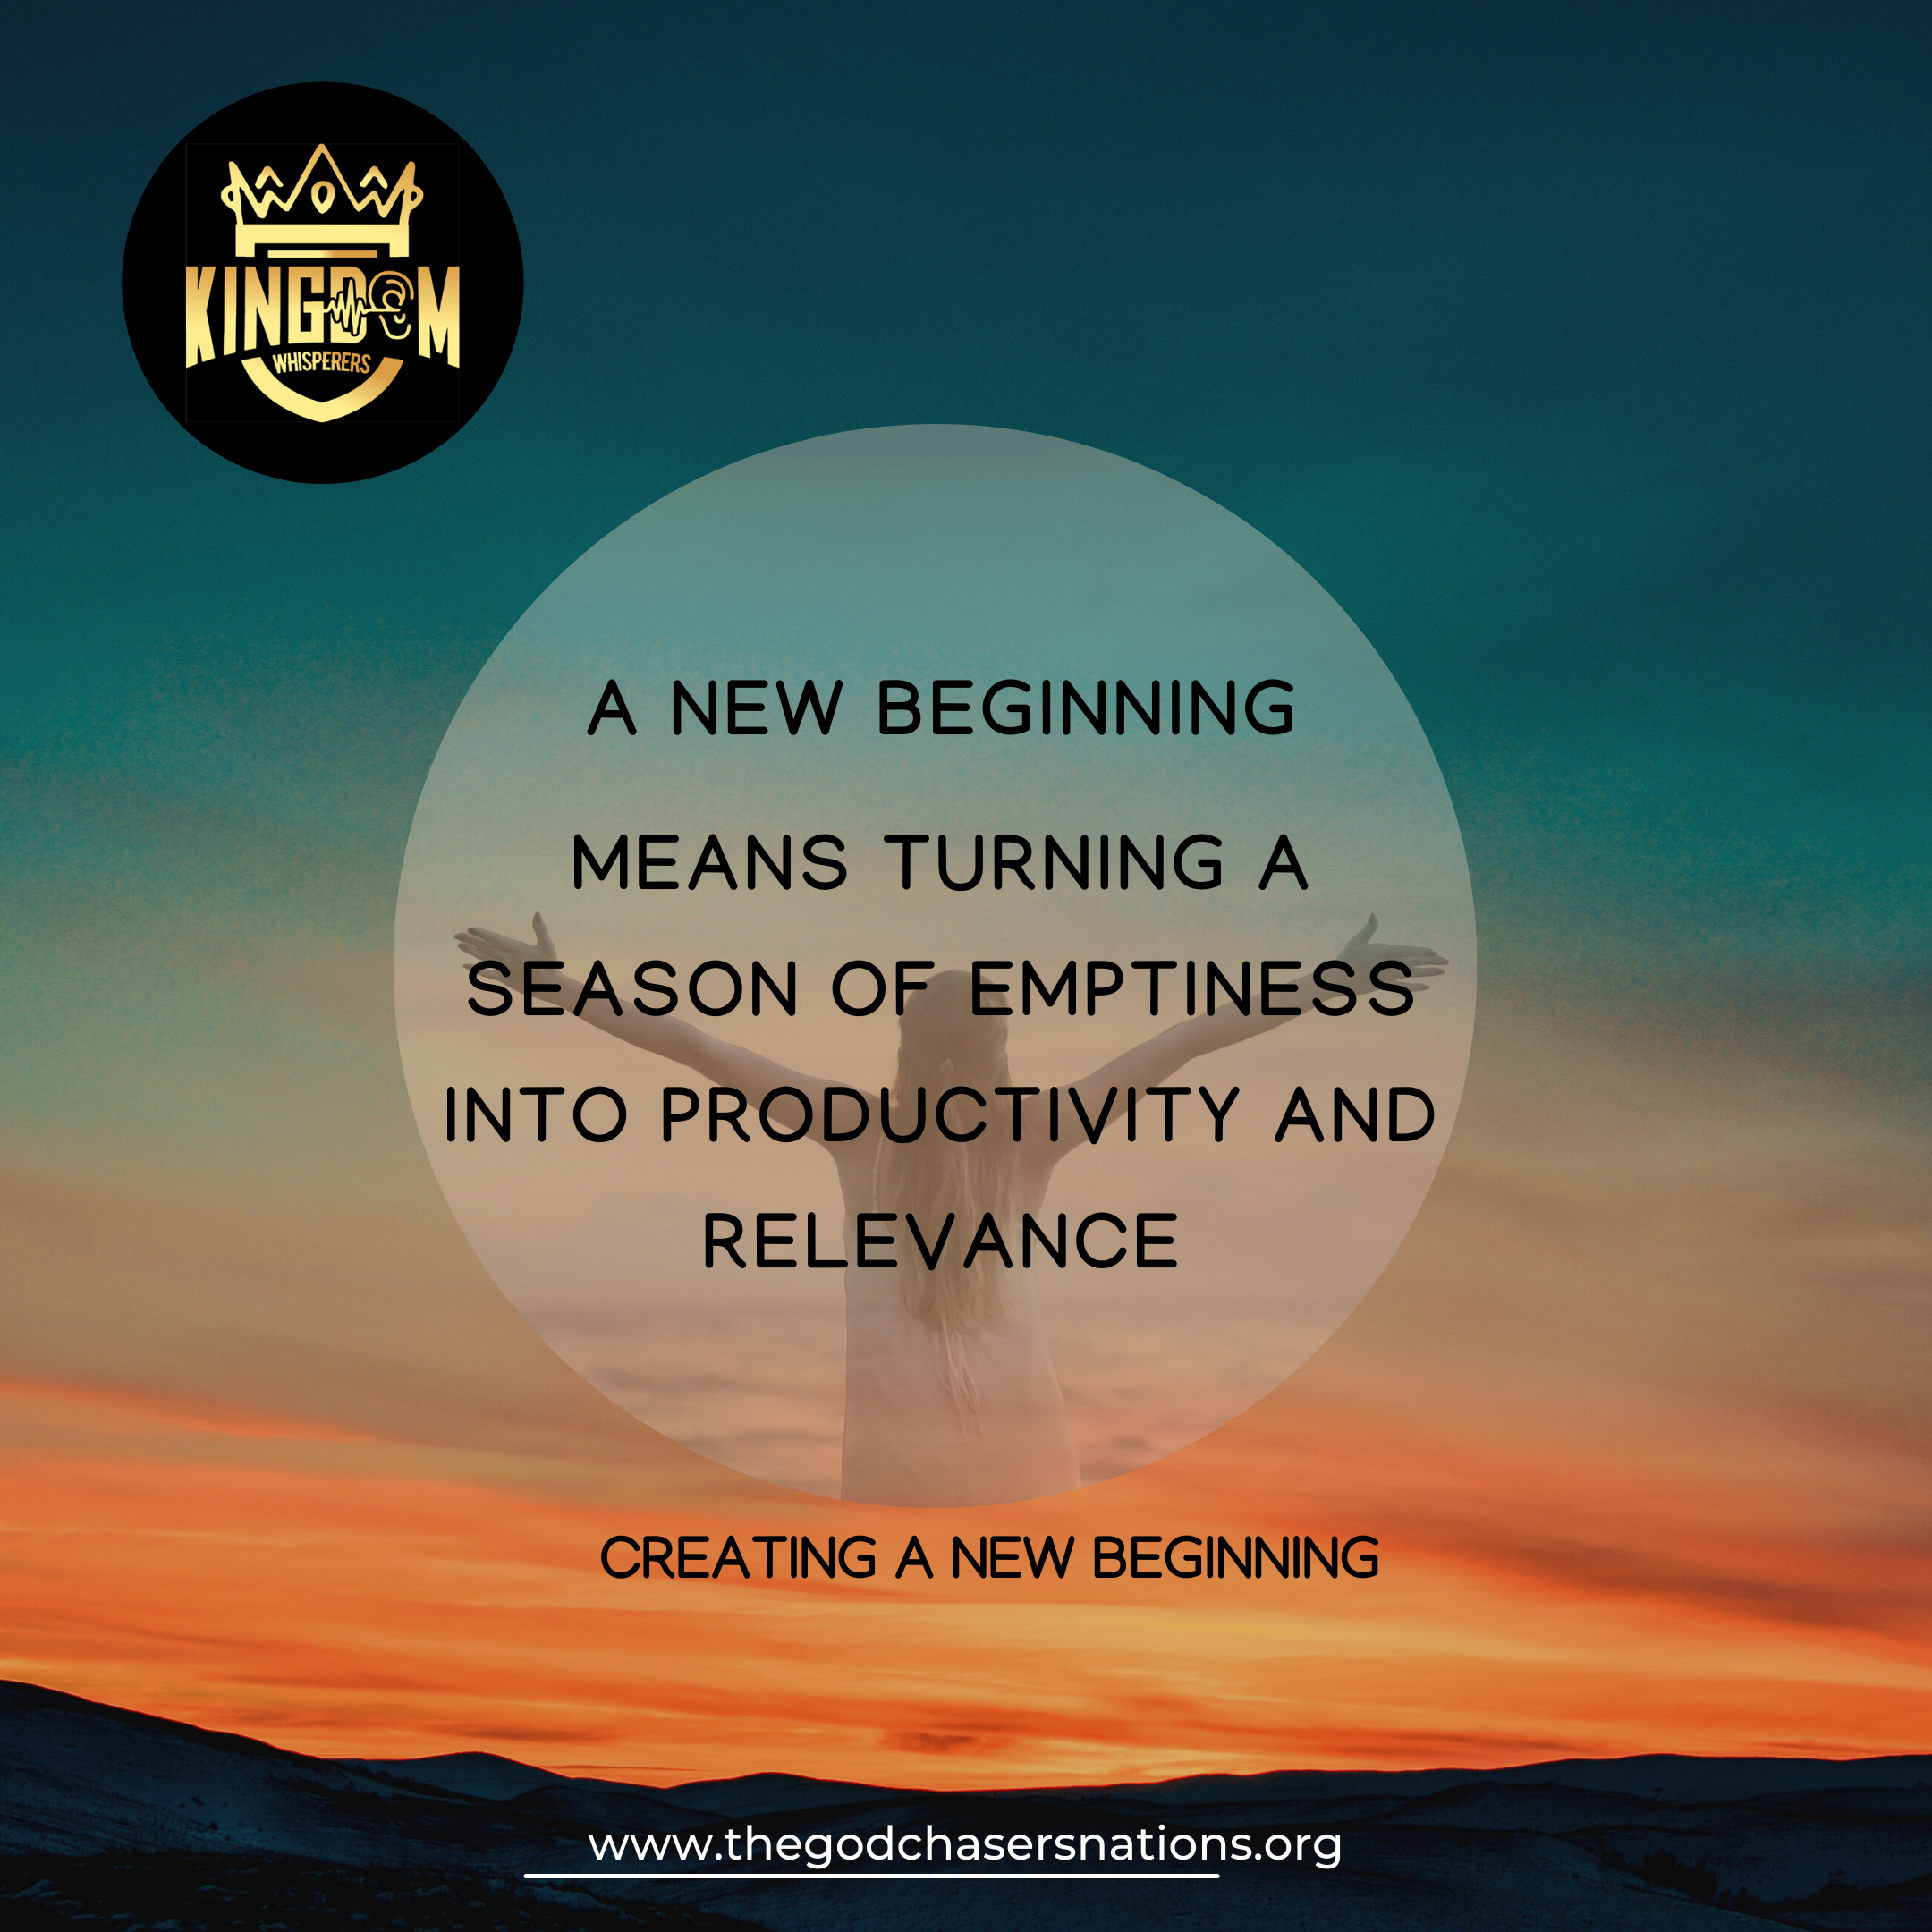 Creating a new beginning